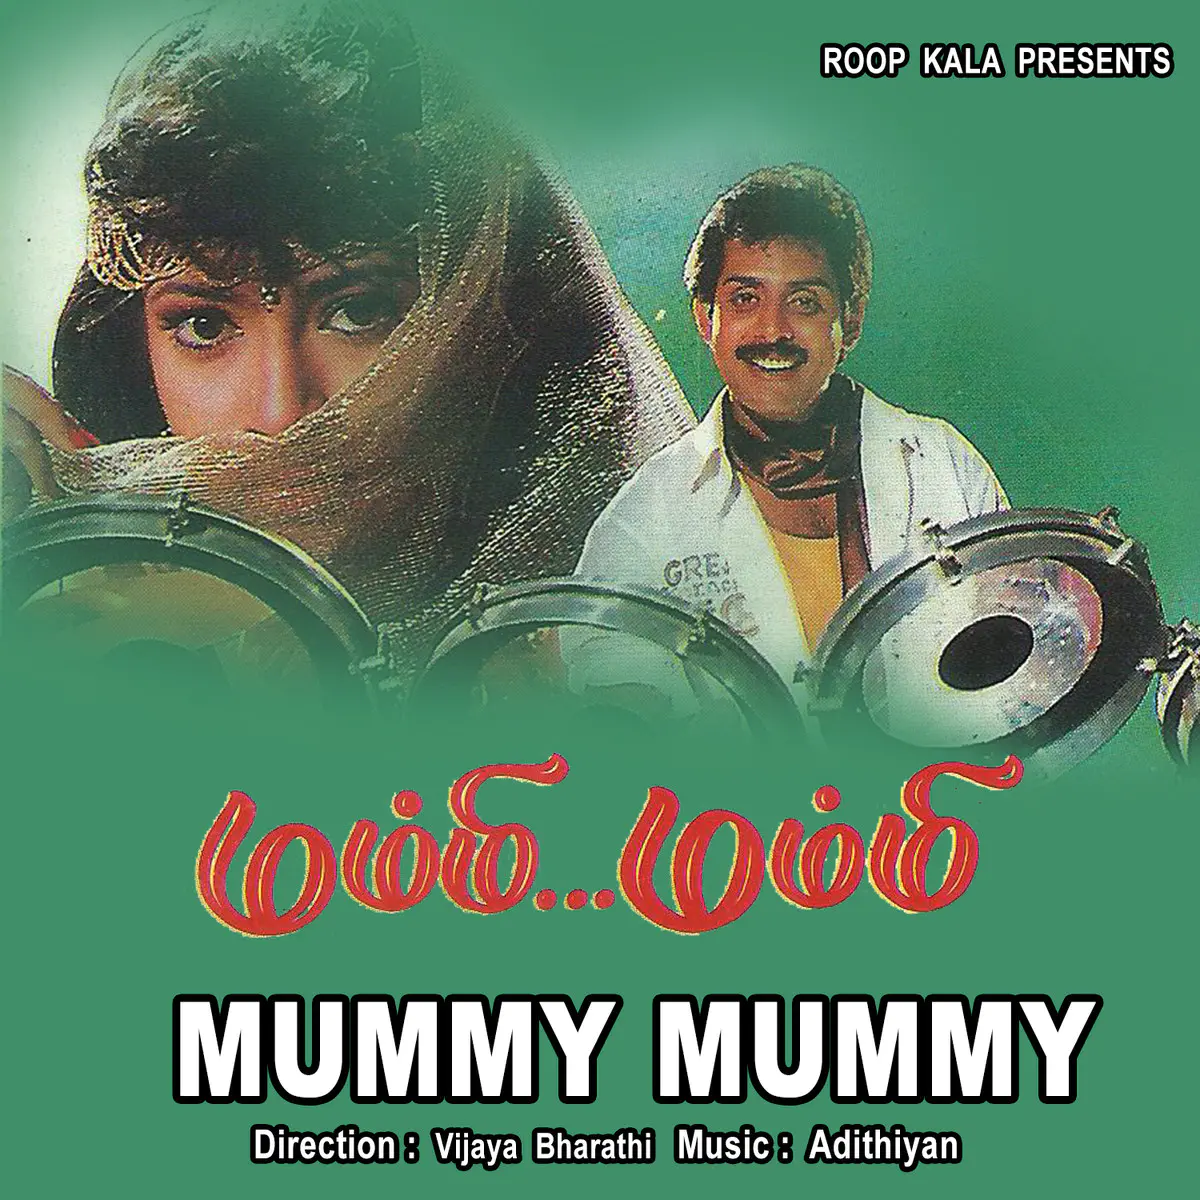 Mummy Mummy Songs Download Mummy Mummy Mp3 Tamil Songs Online Free On Gaana Com